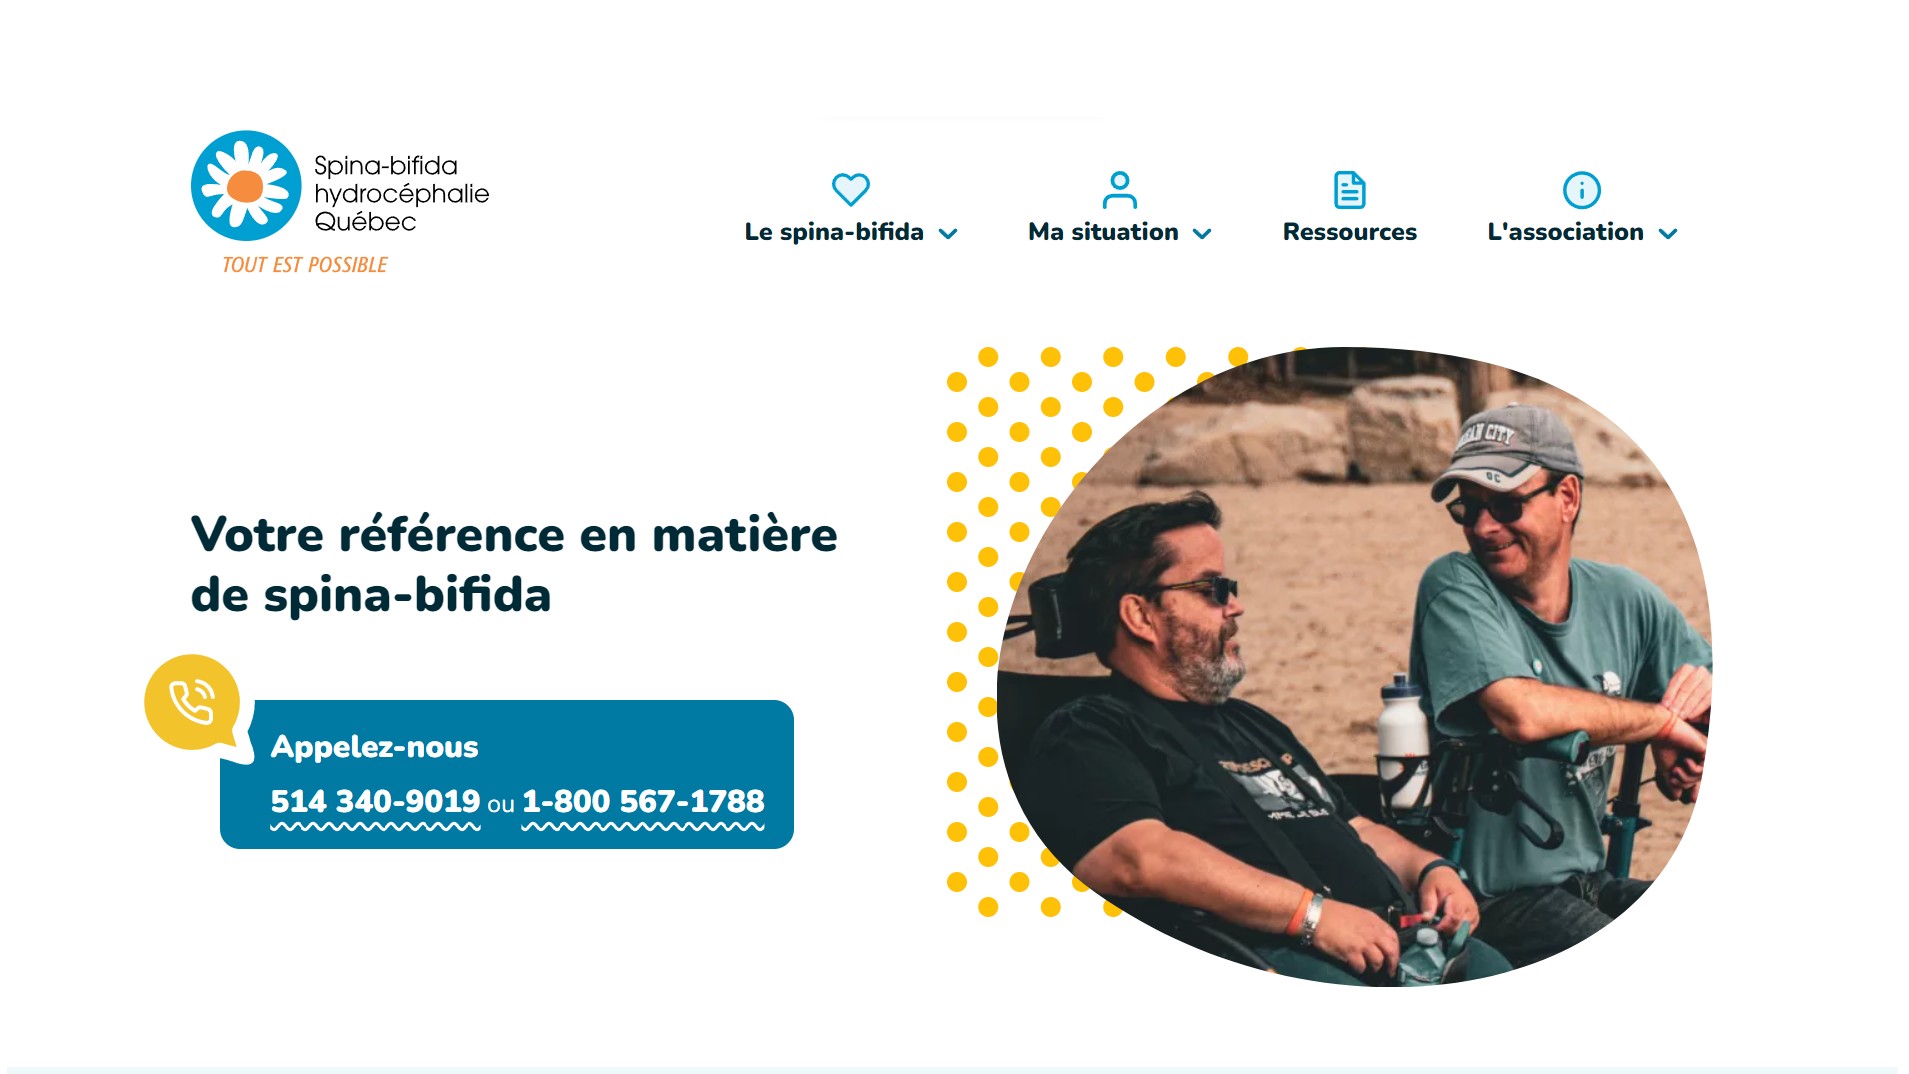  Spina-bifida hydrocéphalie Québec lance son nouveau site Internet